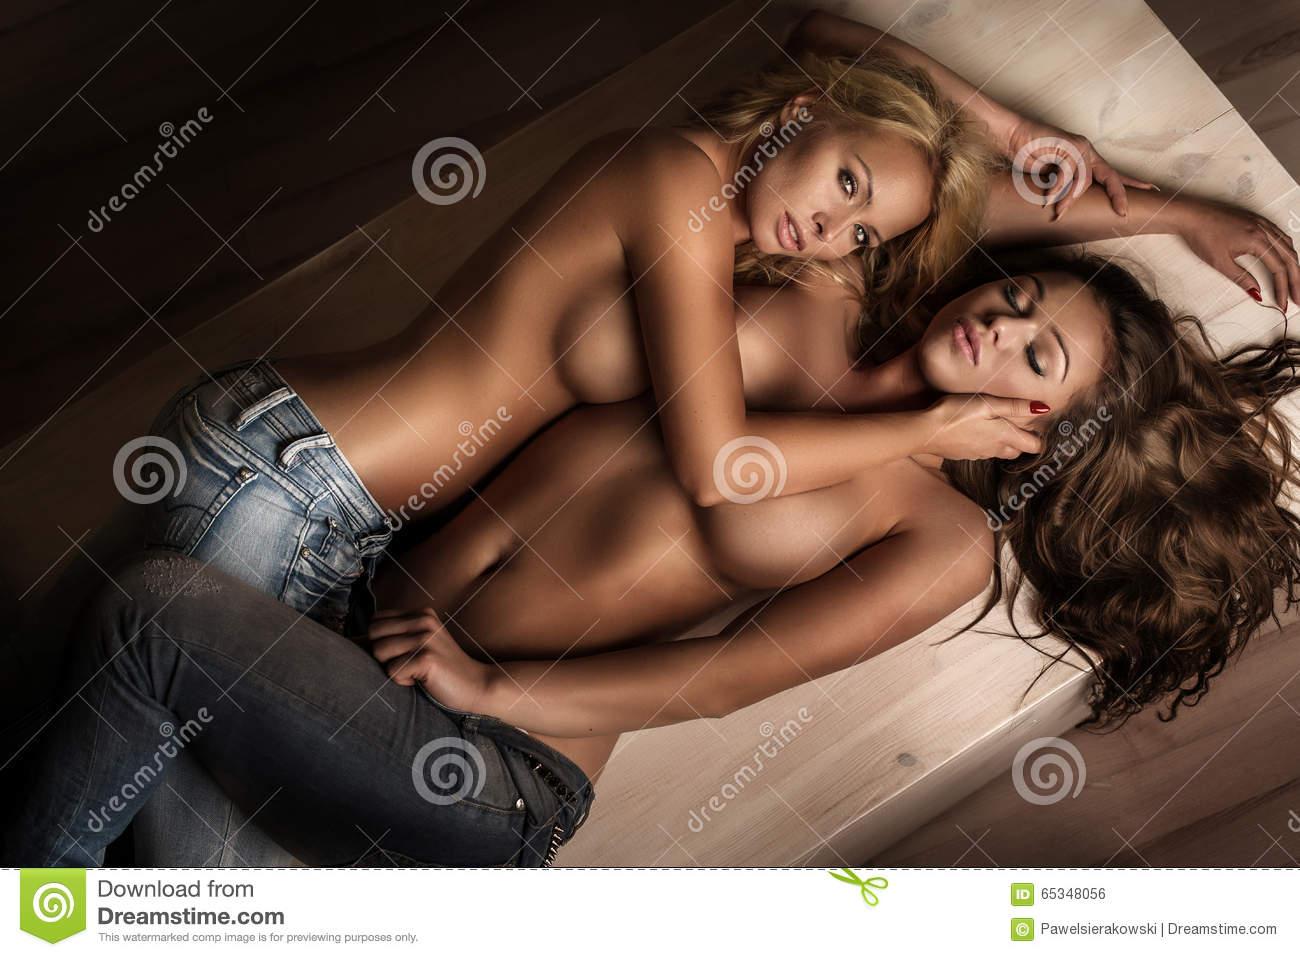 Erotic explicit free photograph